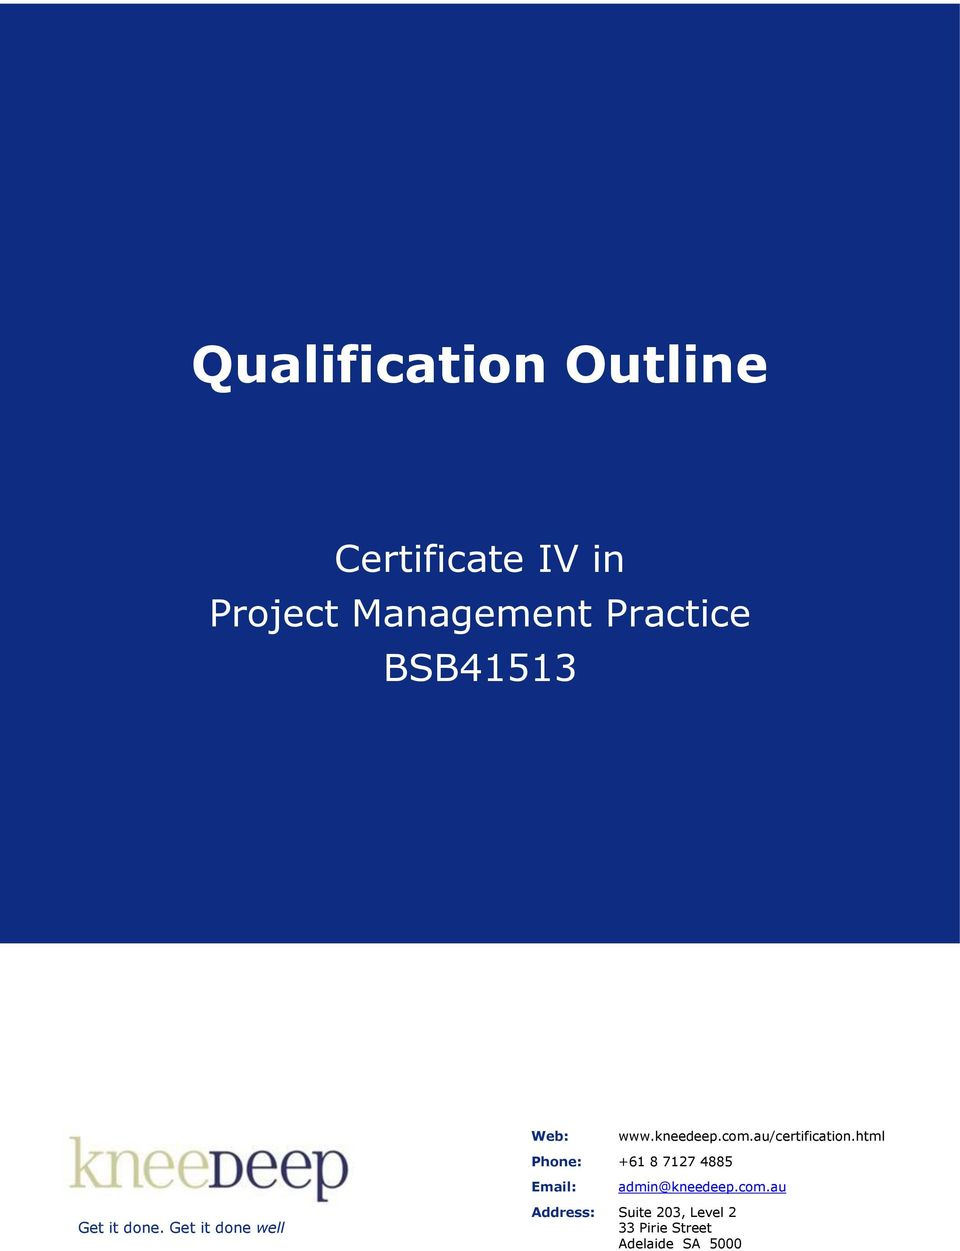 com.au/certification.